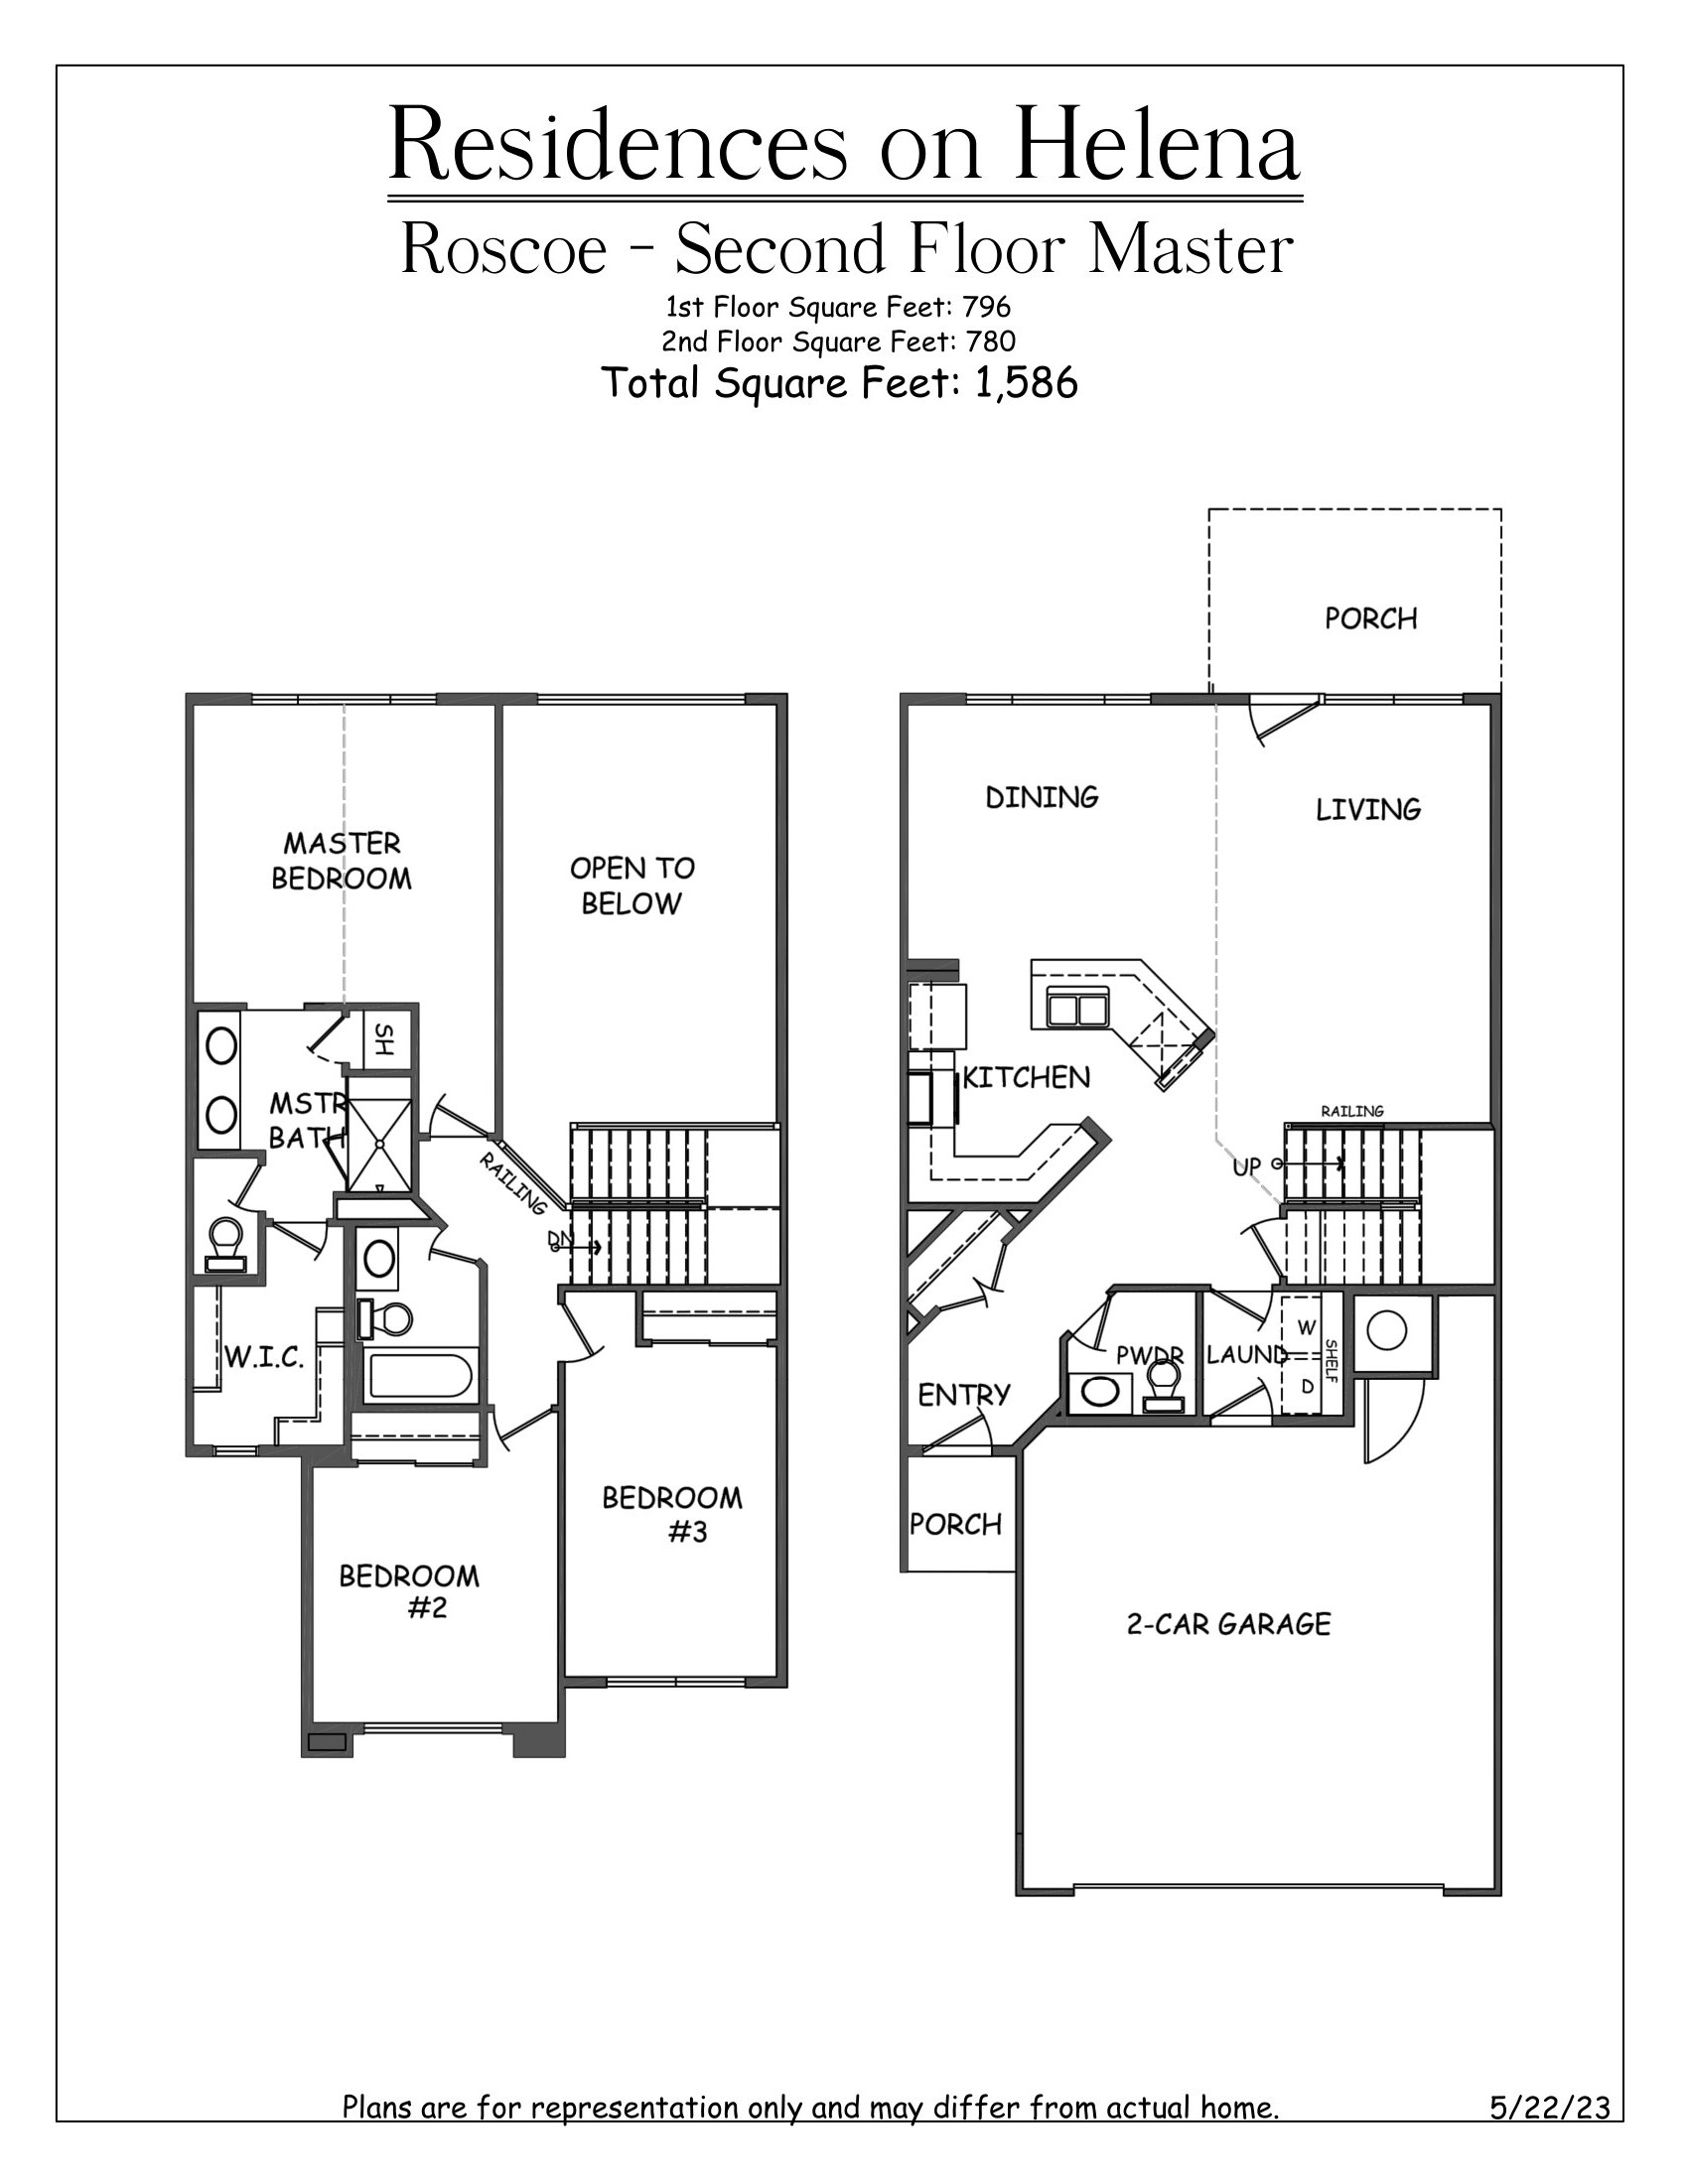 Residences on Helena Roscoe Model